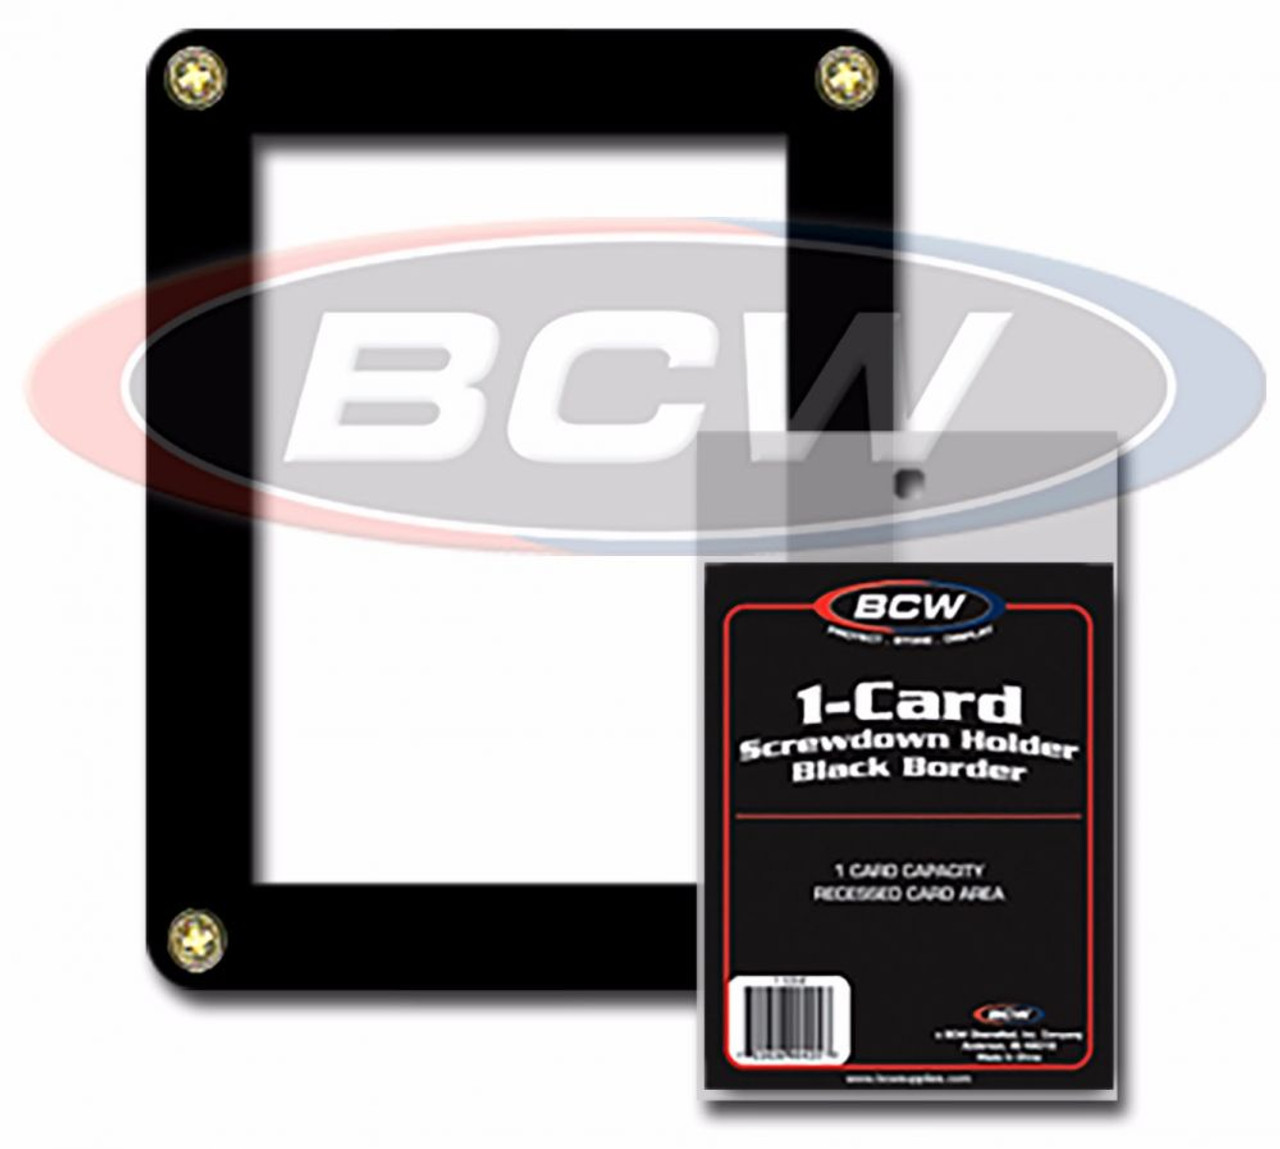 BCW Black Border 1-Card Screwdown Holder / Case of 200